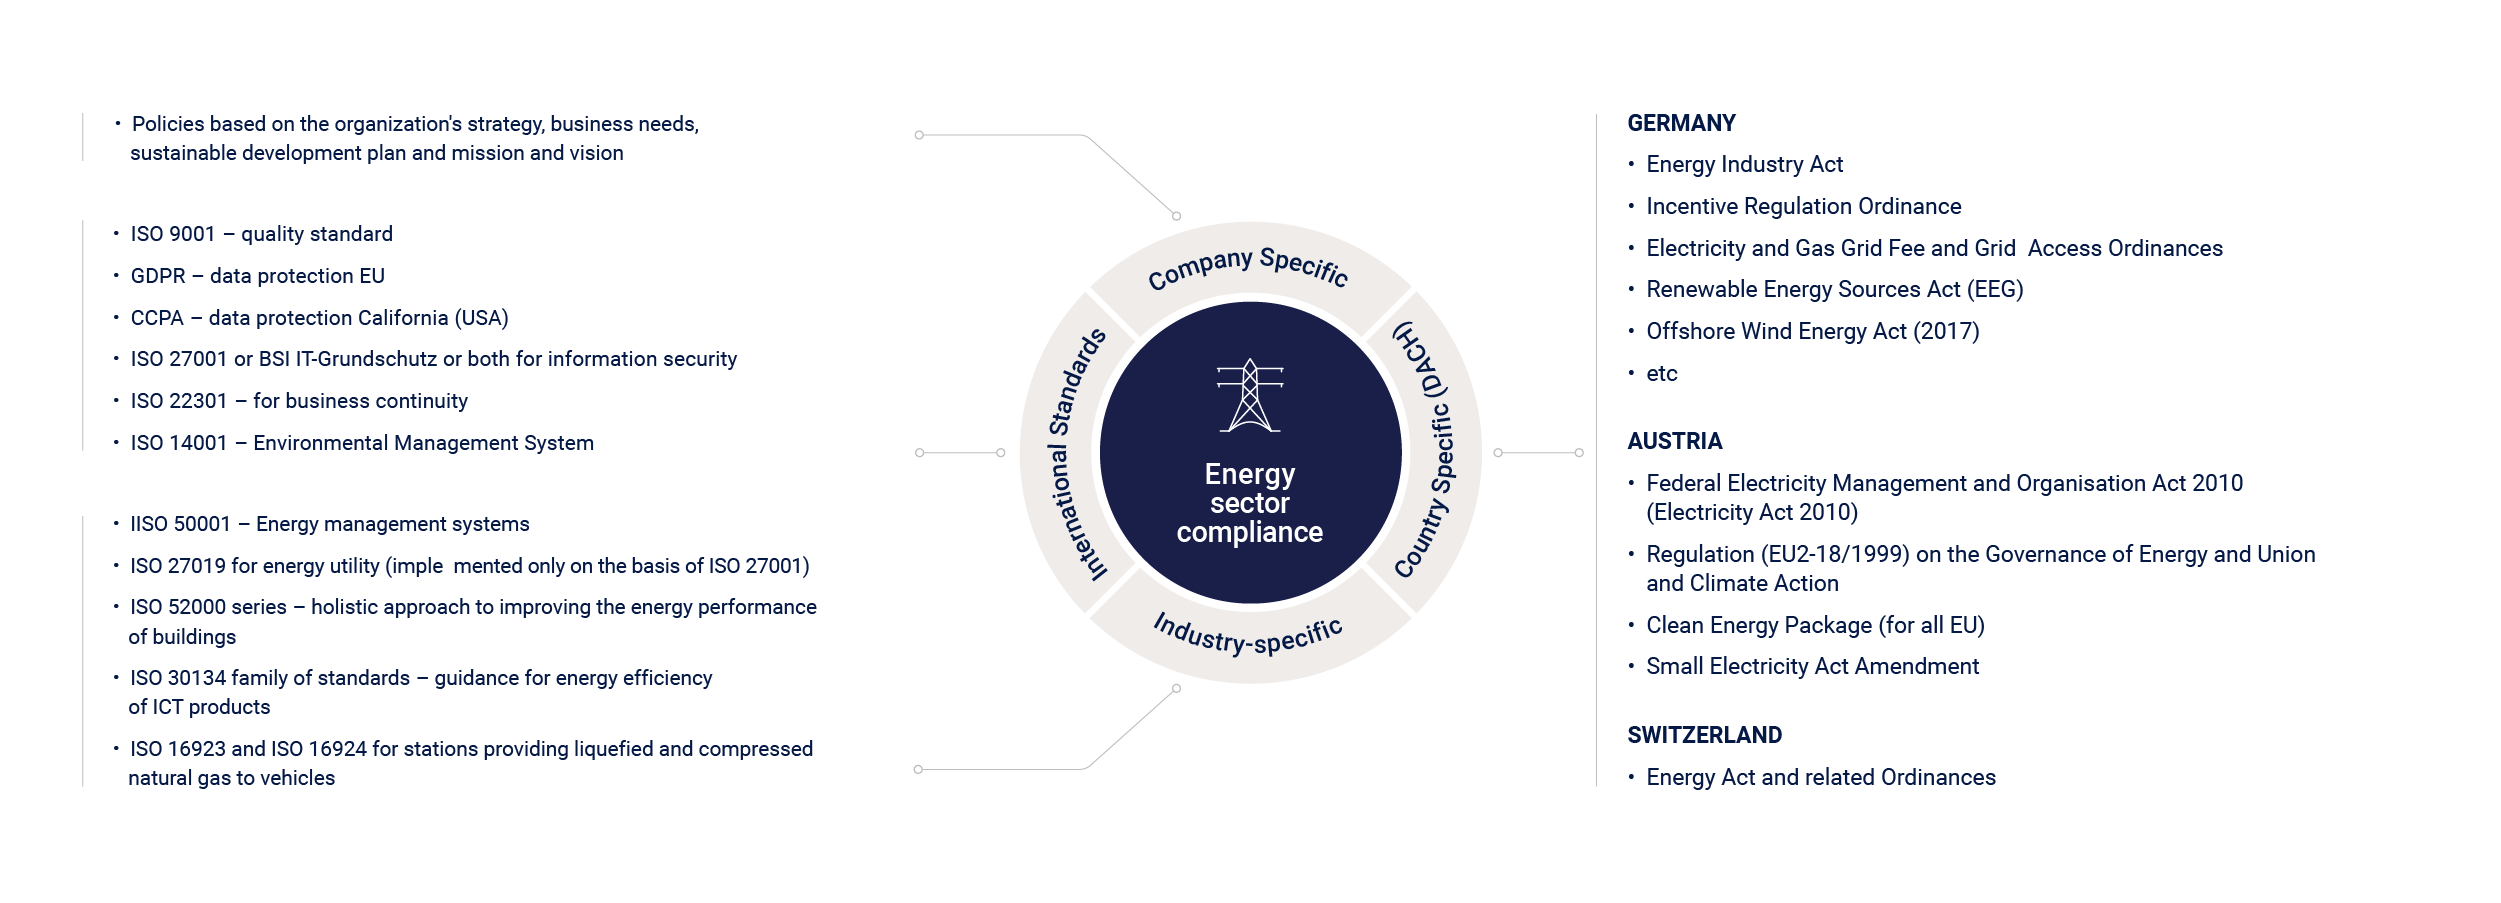 Compliance energy sector